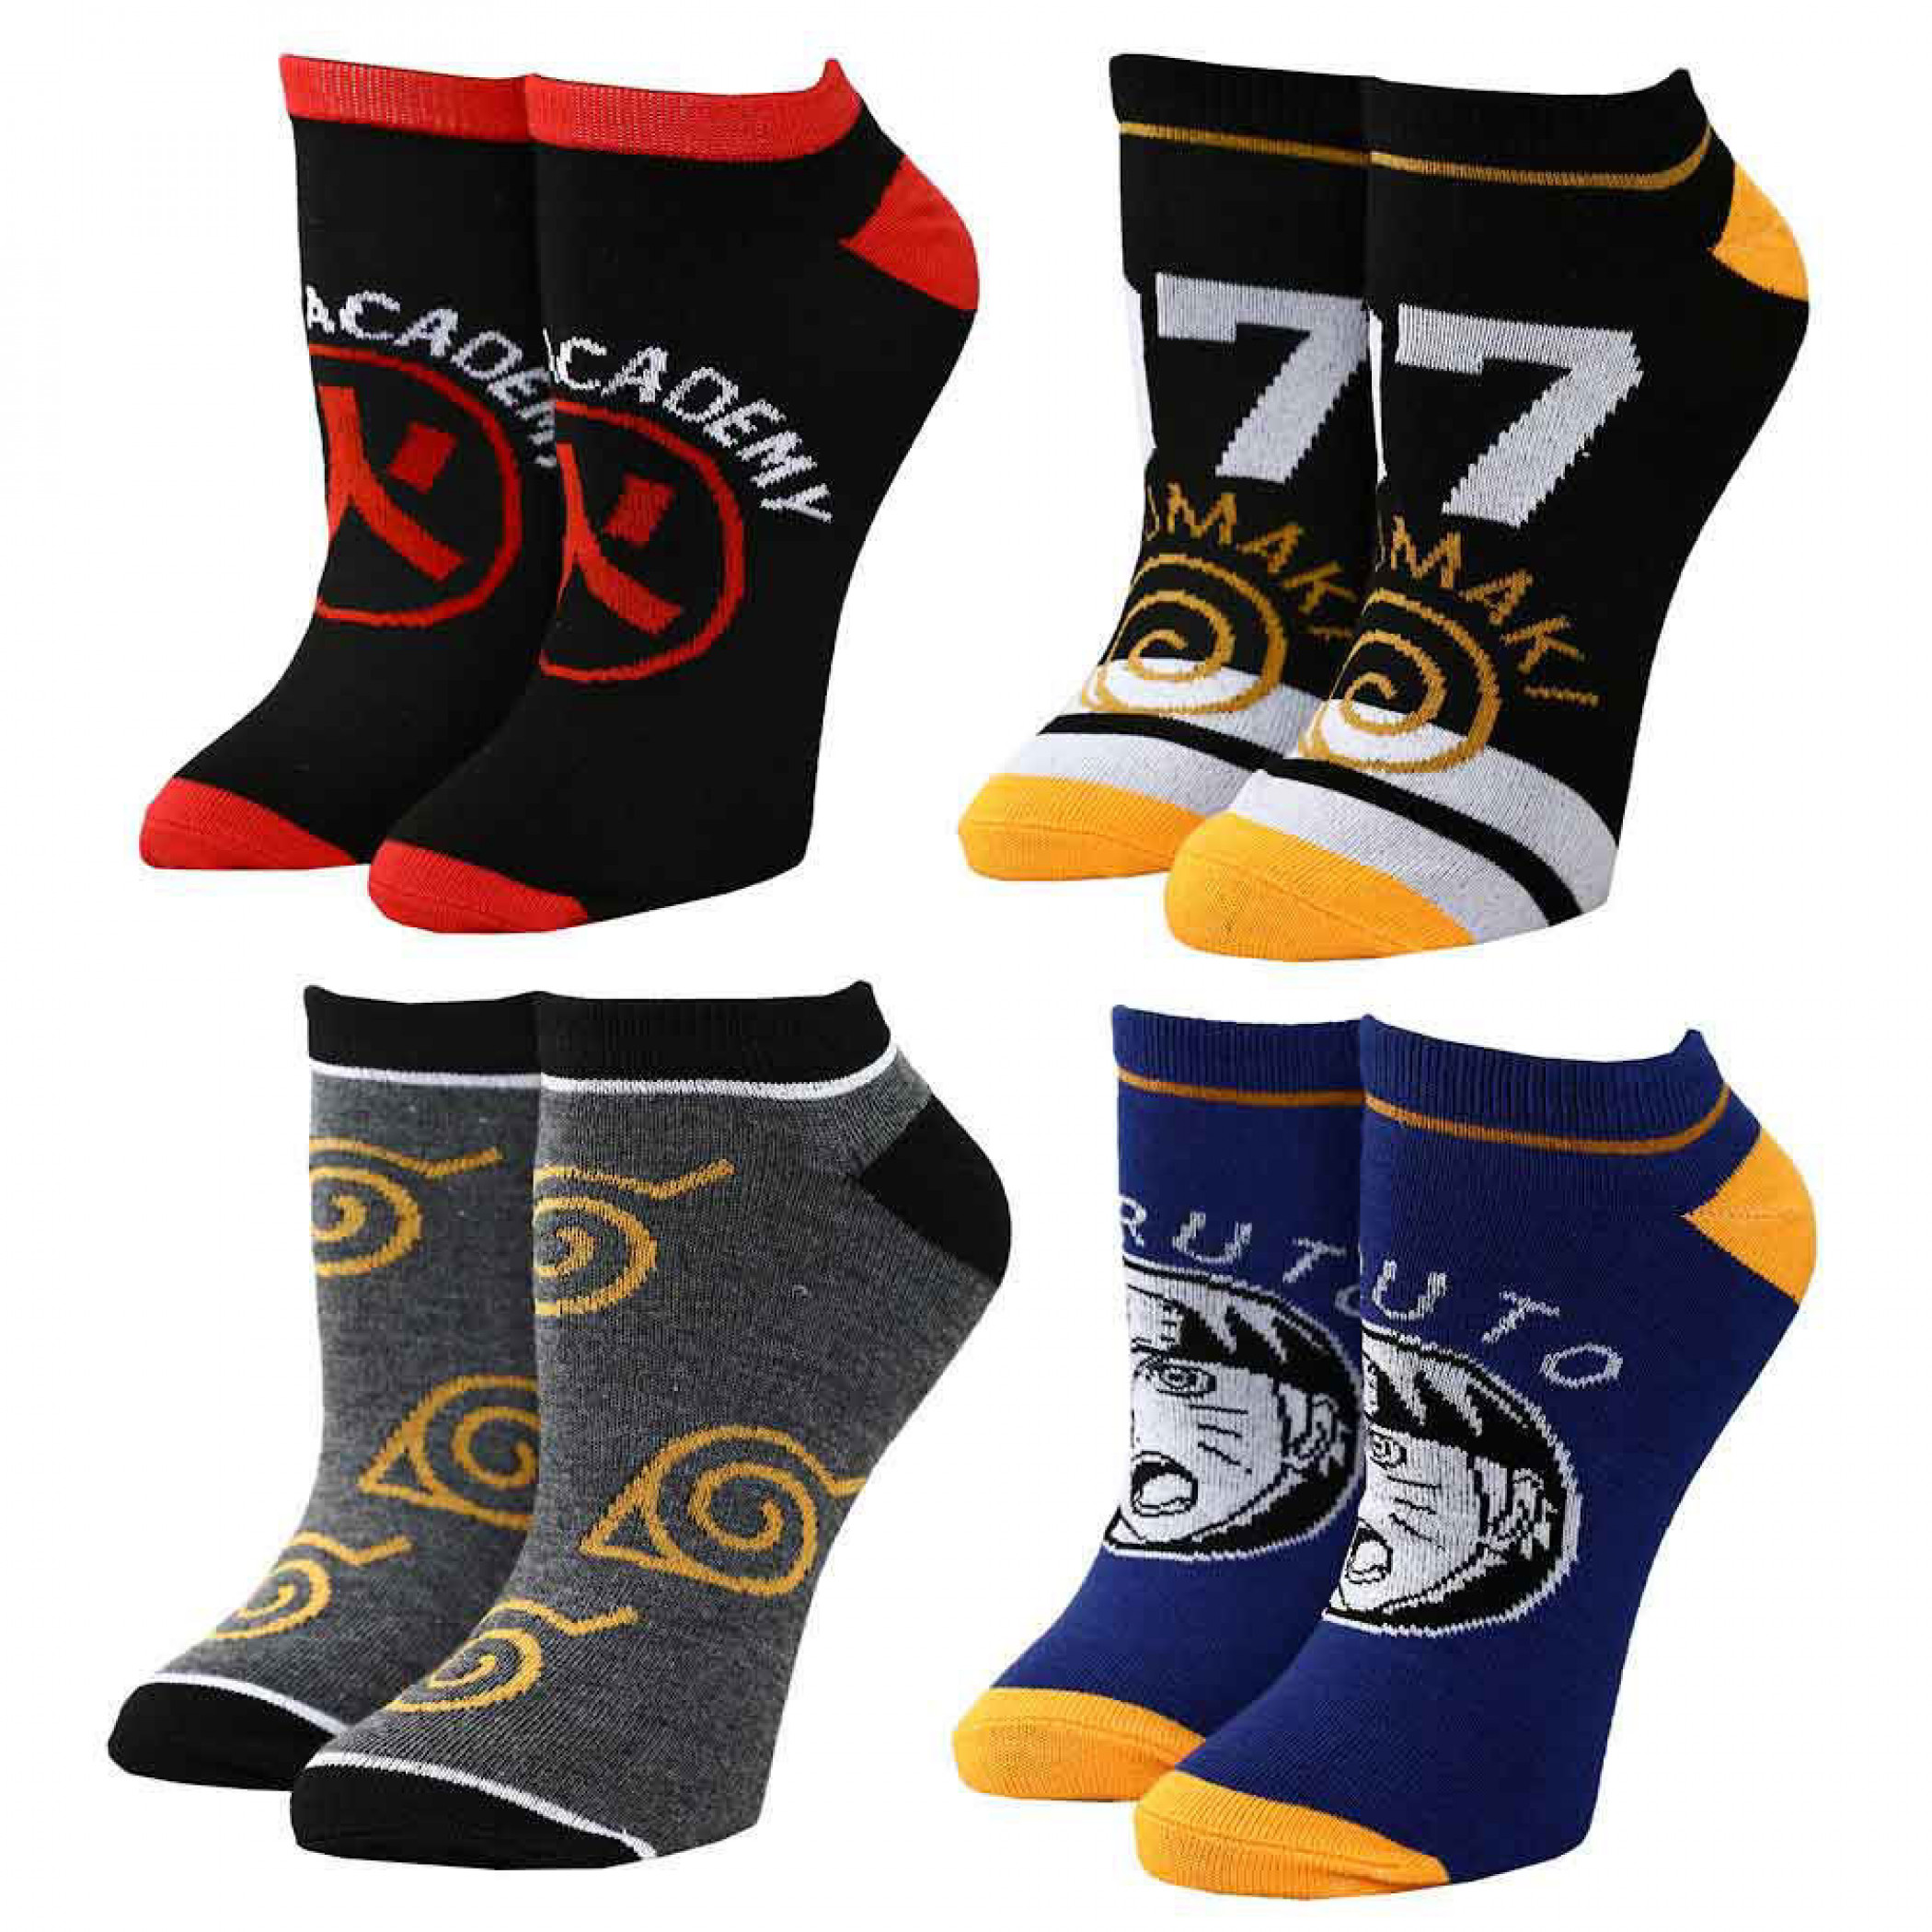 Naruto Shippuden 12 Days of Socks Variety Sock Pack